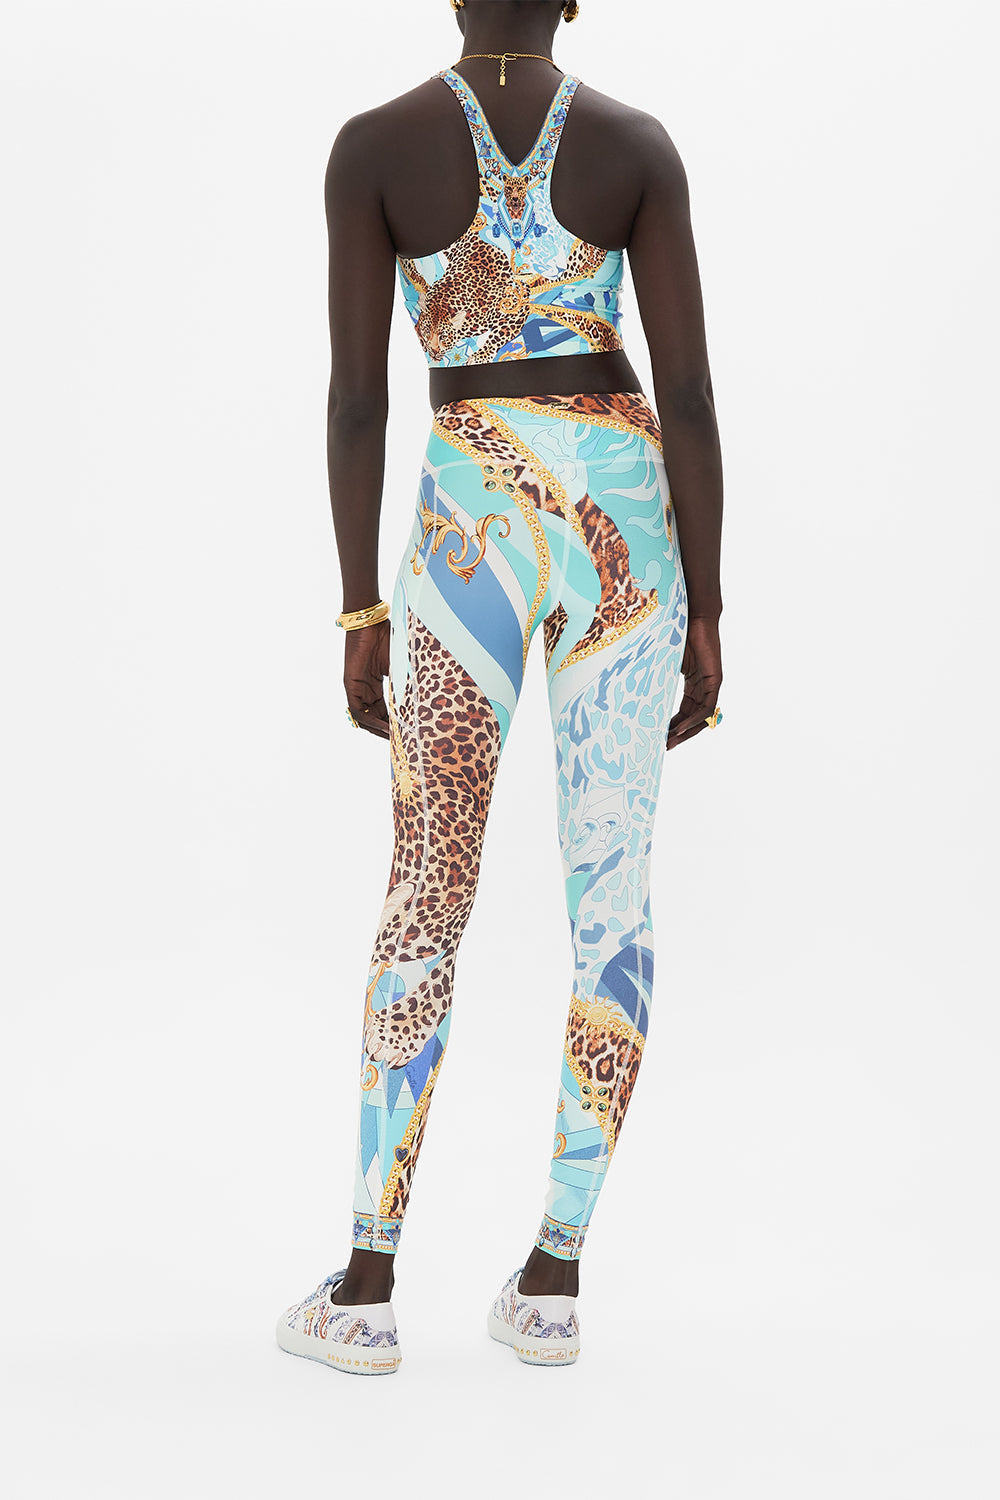 Back view of model wearing CAMILLA activewear legging in Sky Cheetah print